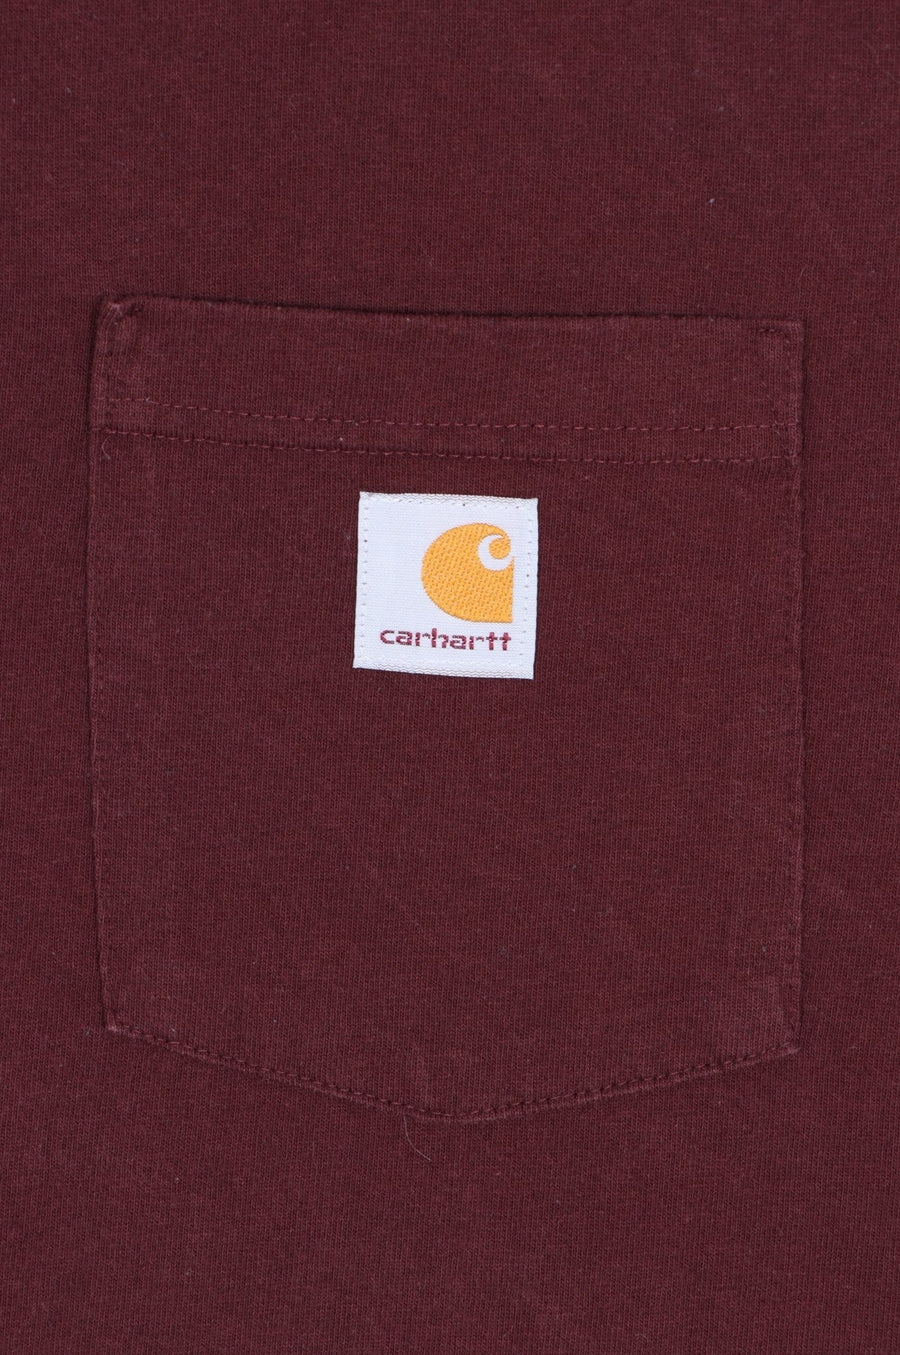 CARHARTT Maroon 'Original Fit' Front Pocket T-Shirt (XXL)